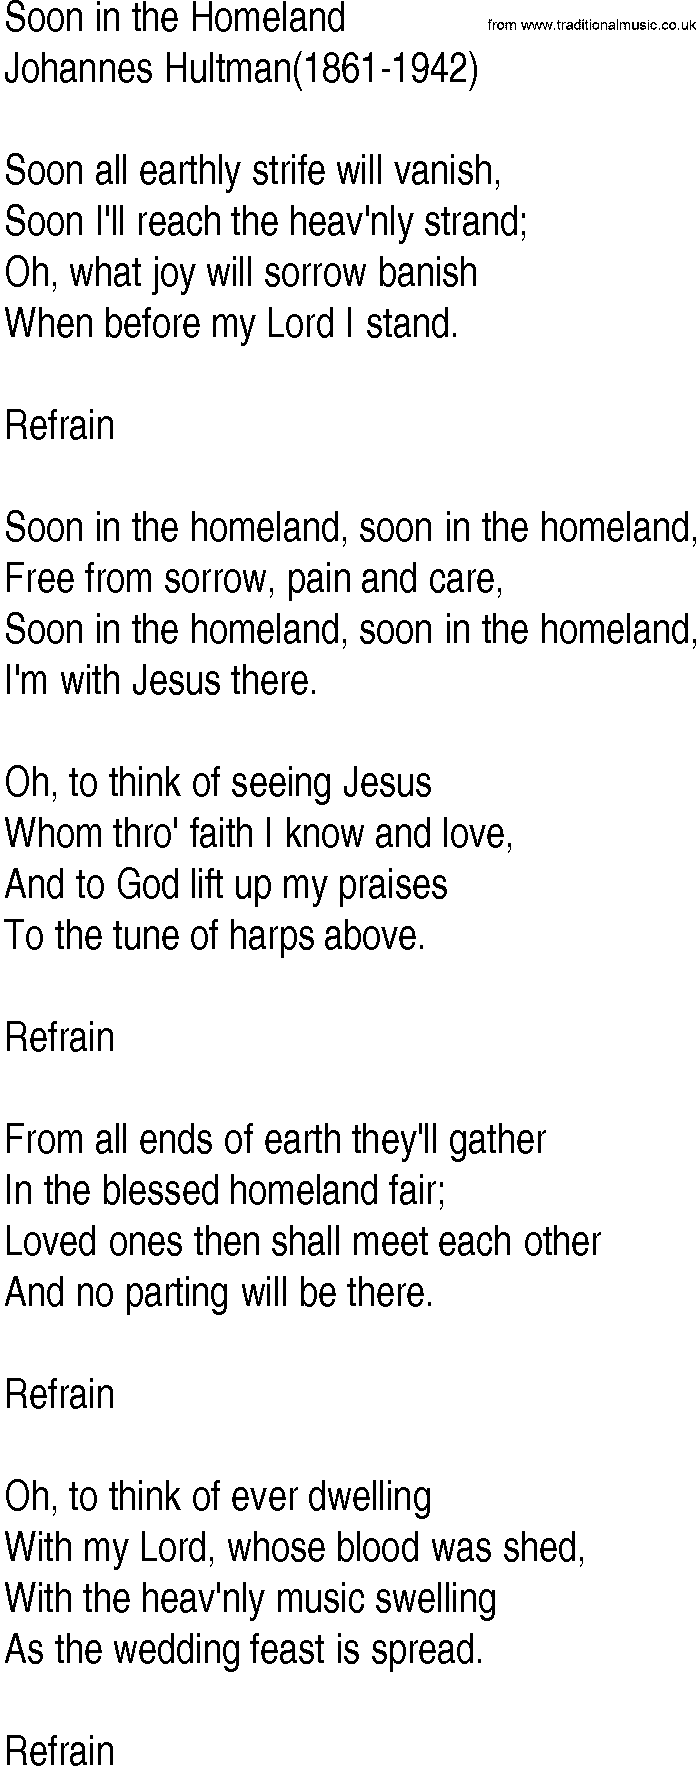 Hymn and Gospel Song: Soon in the Homeland by Johannes Hultman lyrics